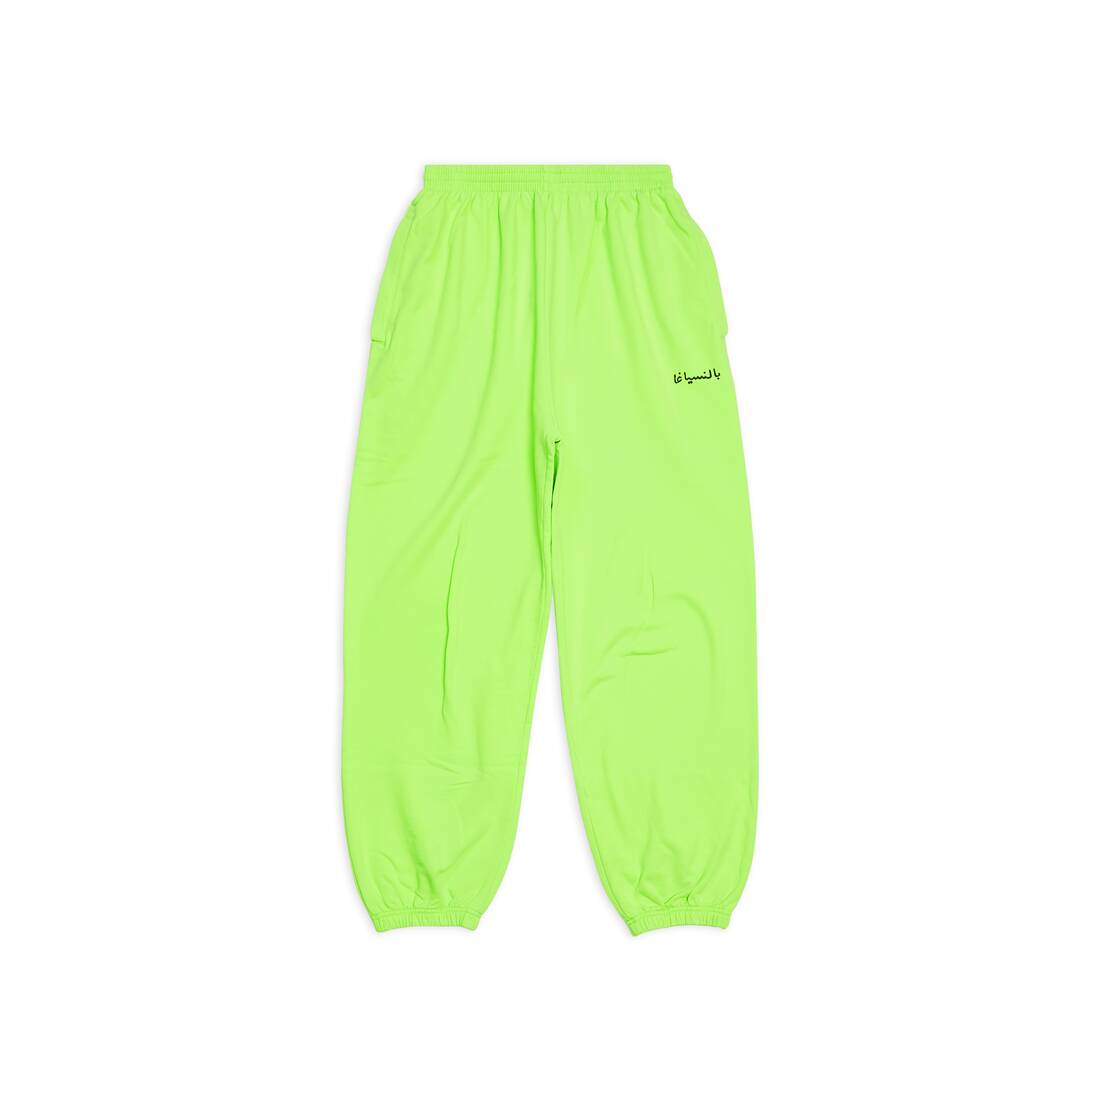 Balenciaga Music Acid Arab Merch Stretch Knee Pants in neon green and black medium fleece